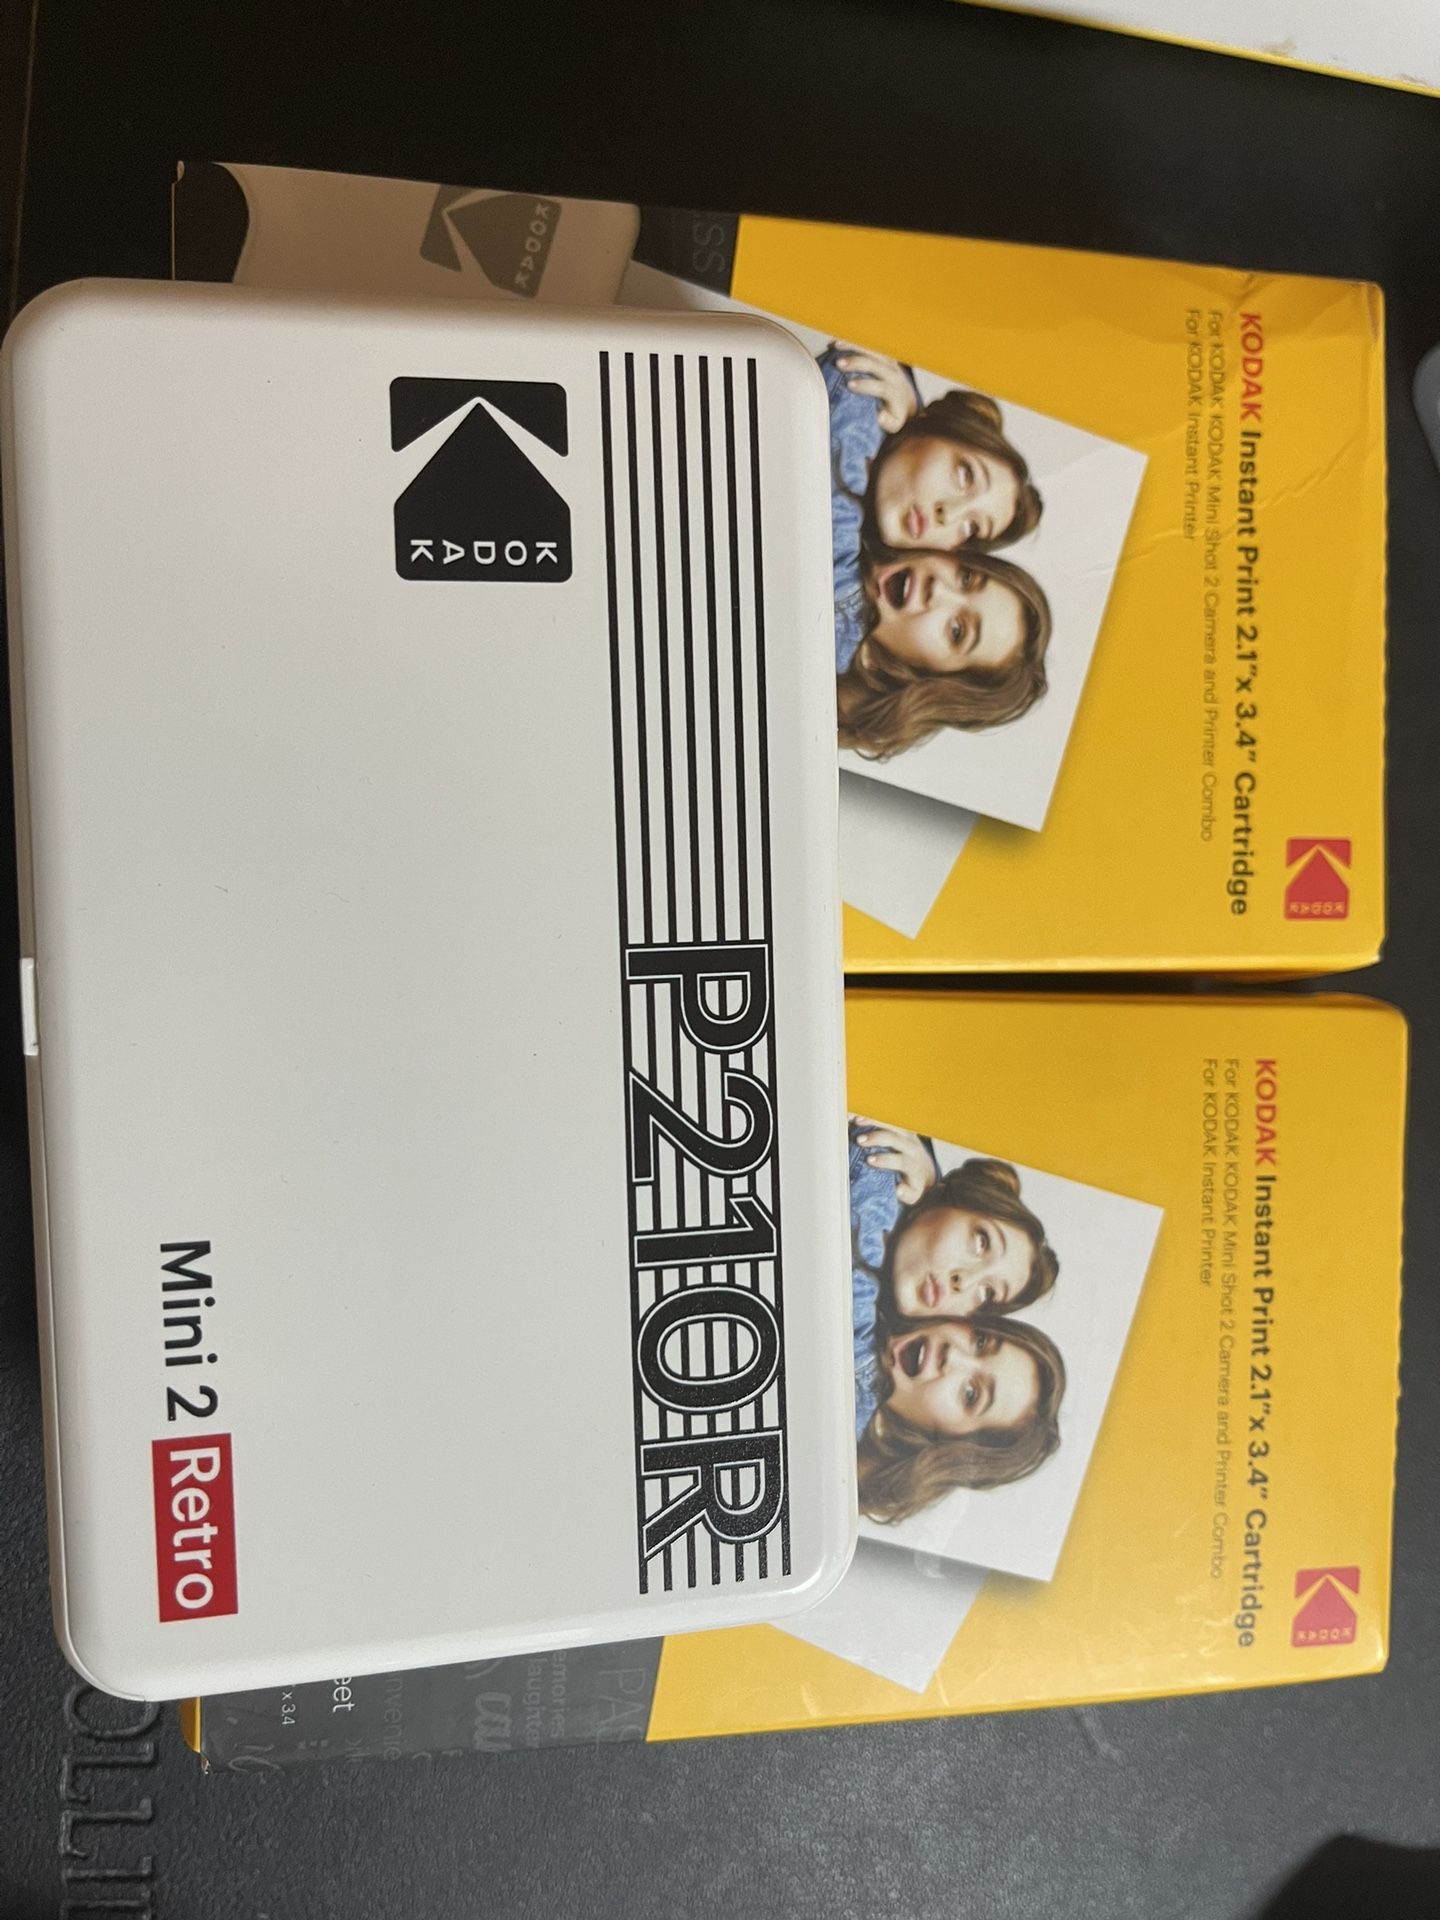 KODAK Mini 2 Retro 4PASS Portable Photo Printer (2.1x3.4 inches) + 68 Sheets Bundle